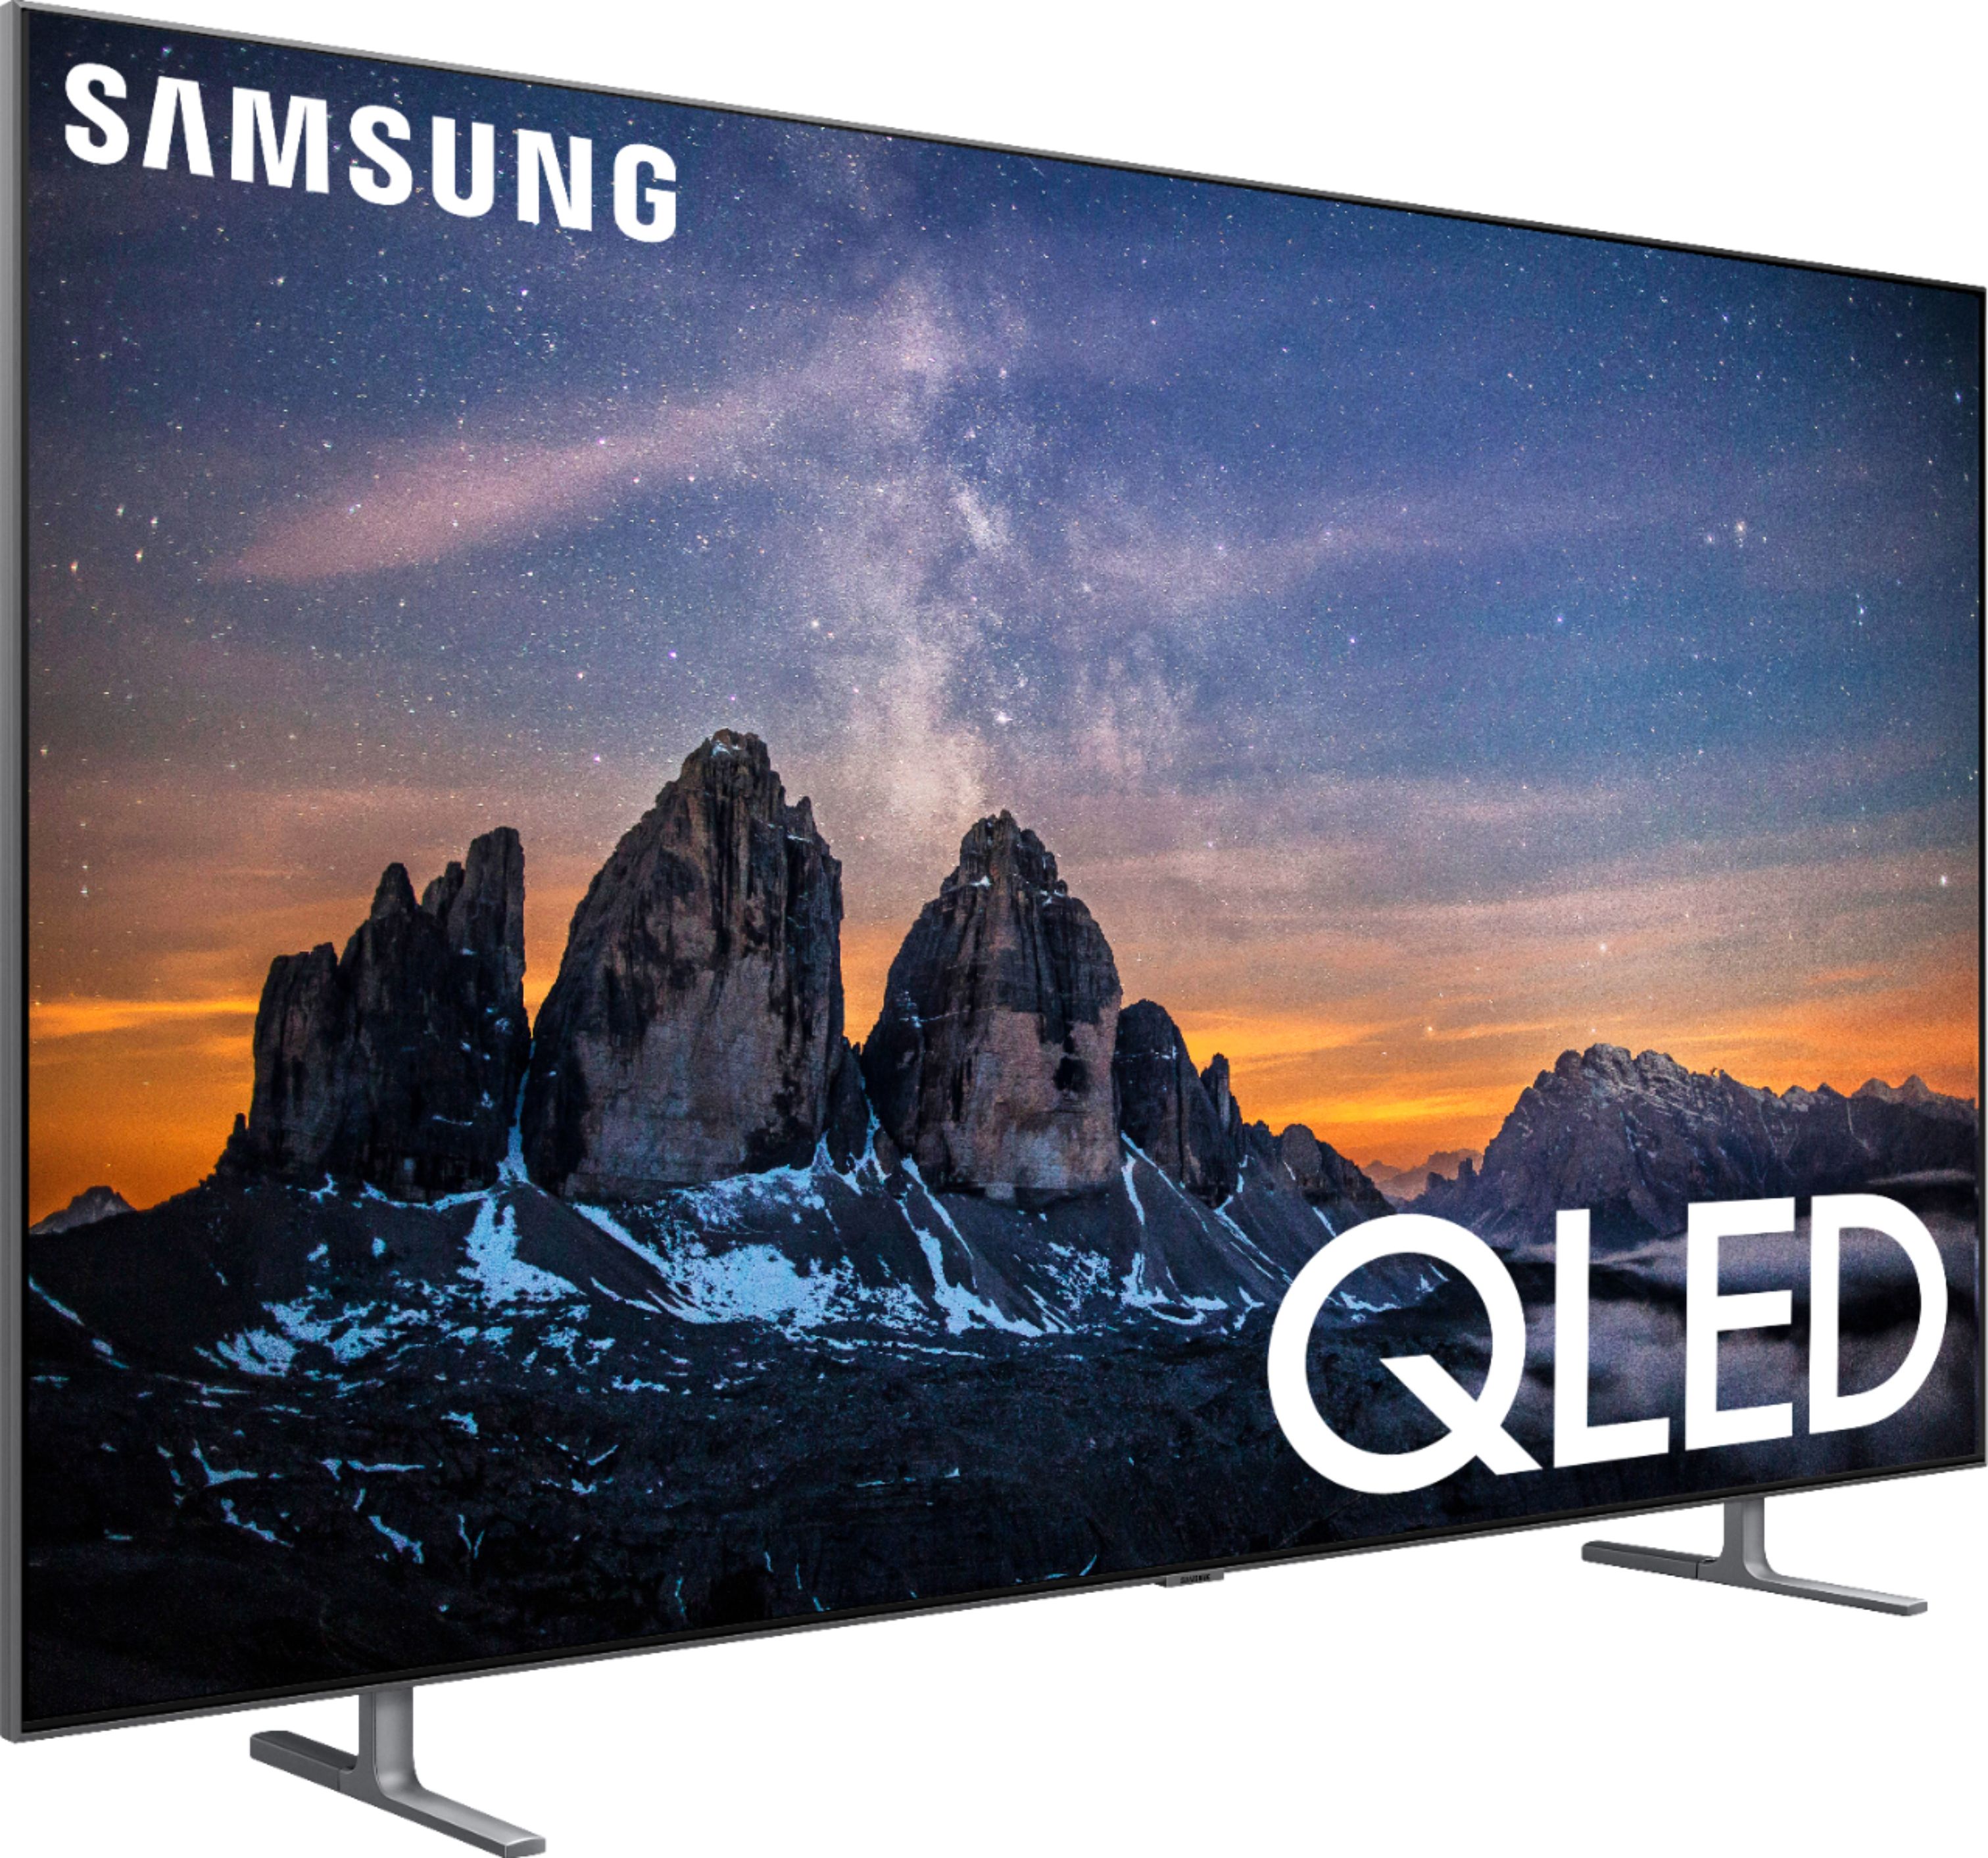 Best Buy: Samsung Q80 Series LED $K UHD Smart Tizen TV QN75Q80RAFXZA